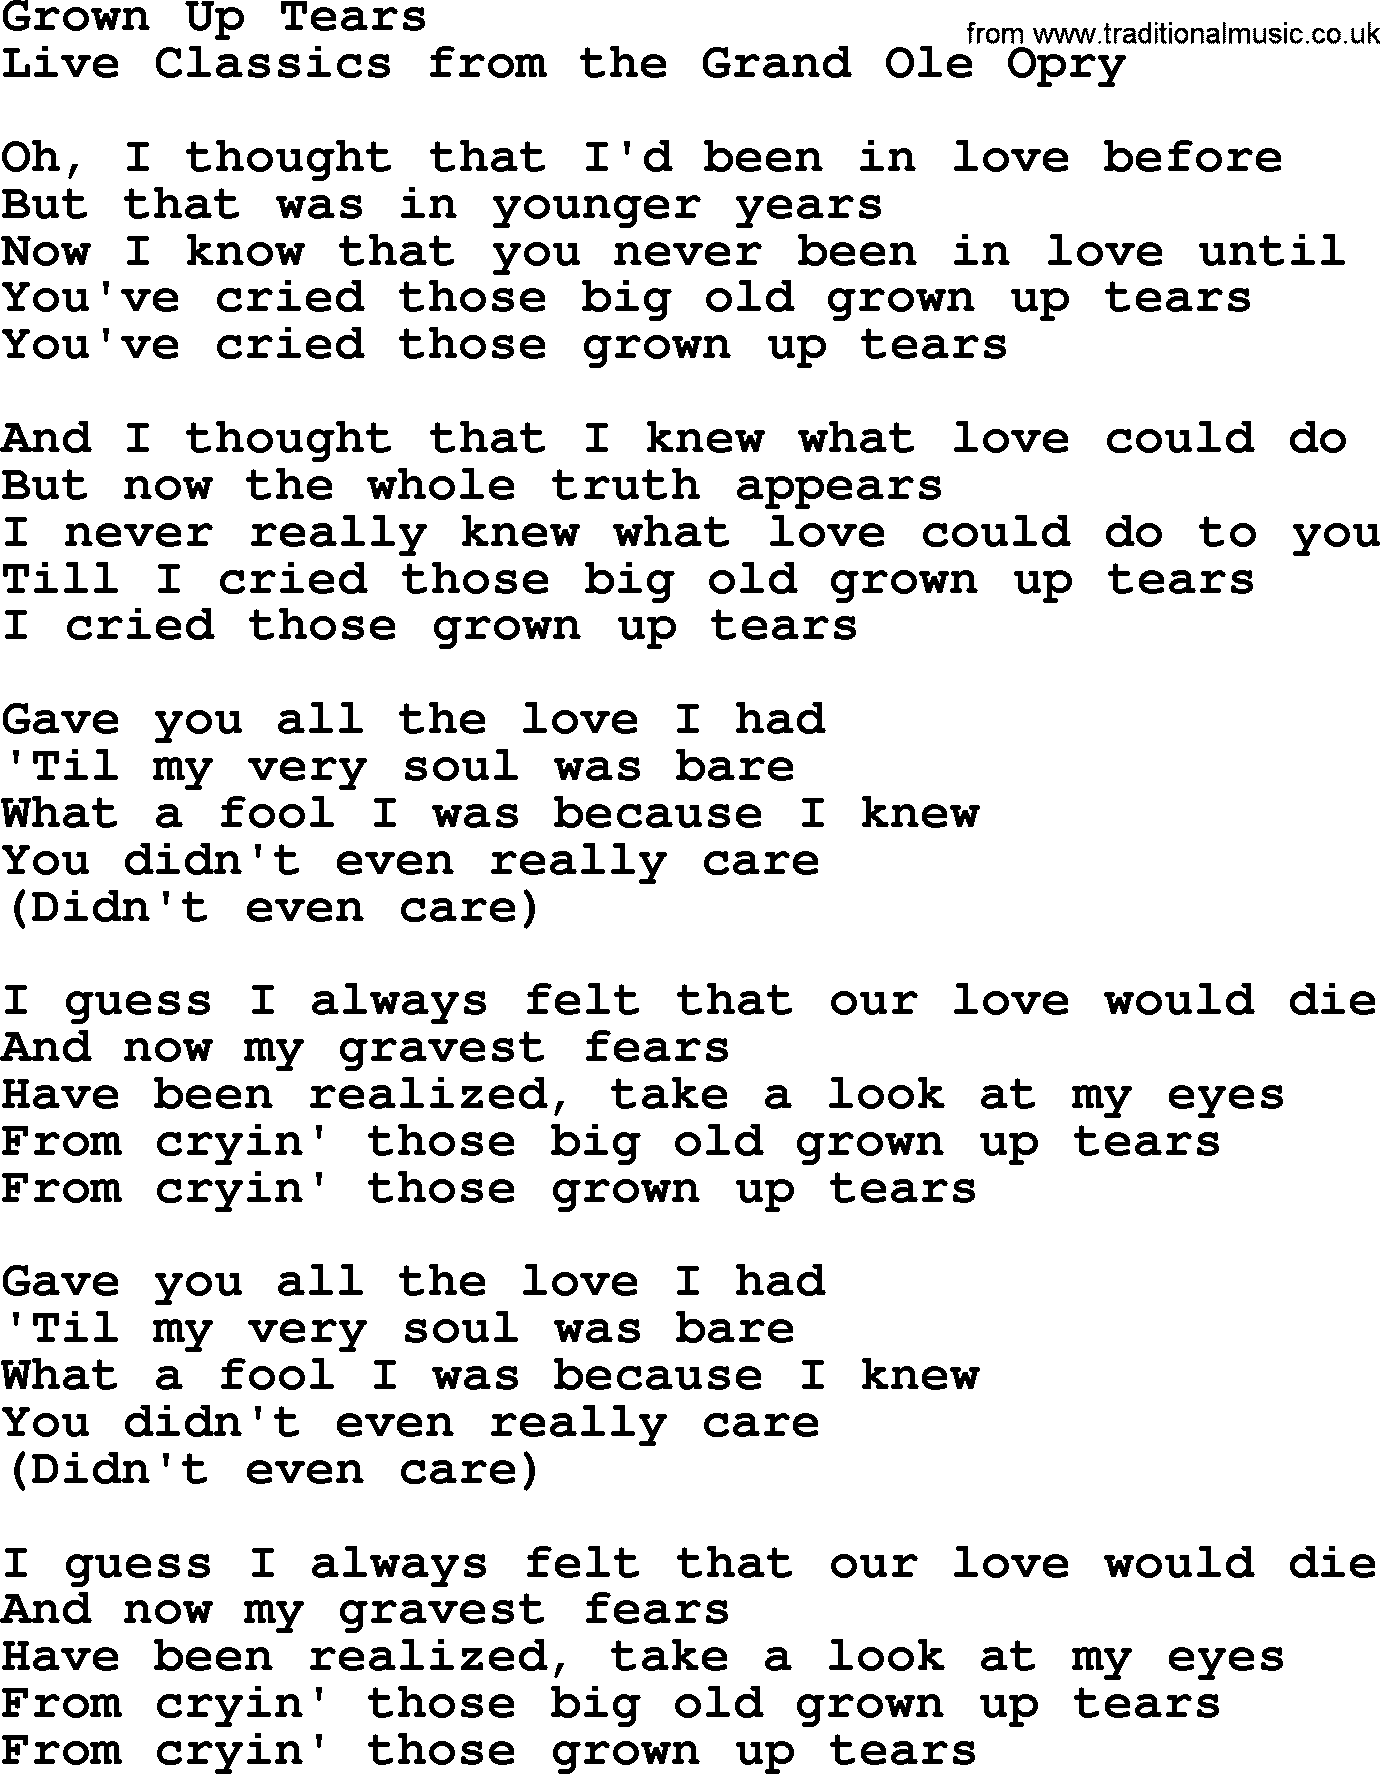 Up Tears, by Marty Robbins - lyrics